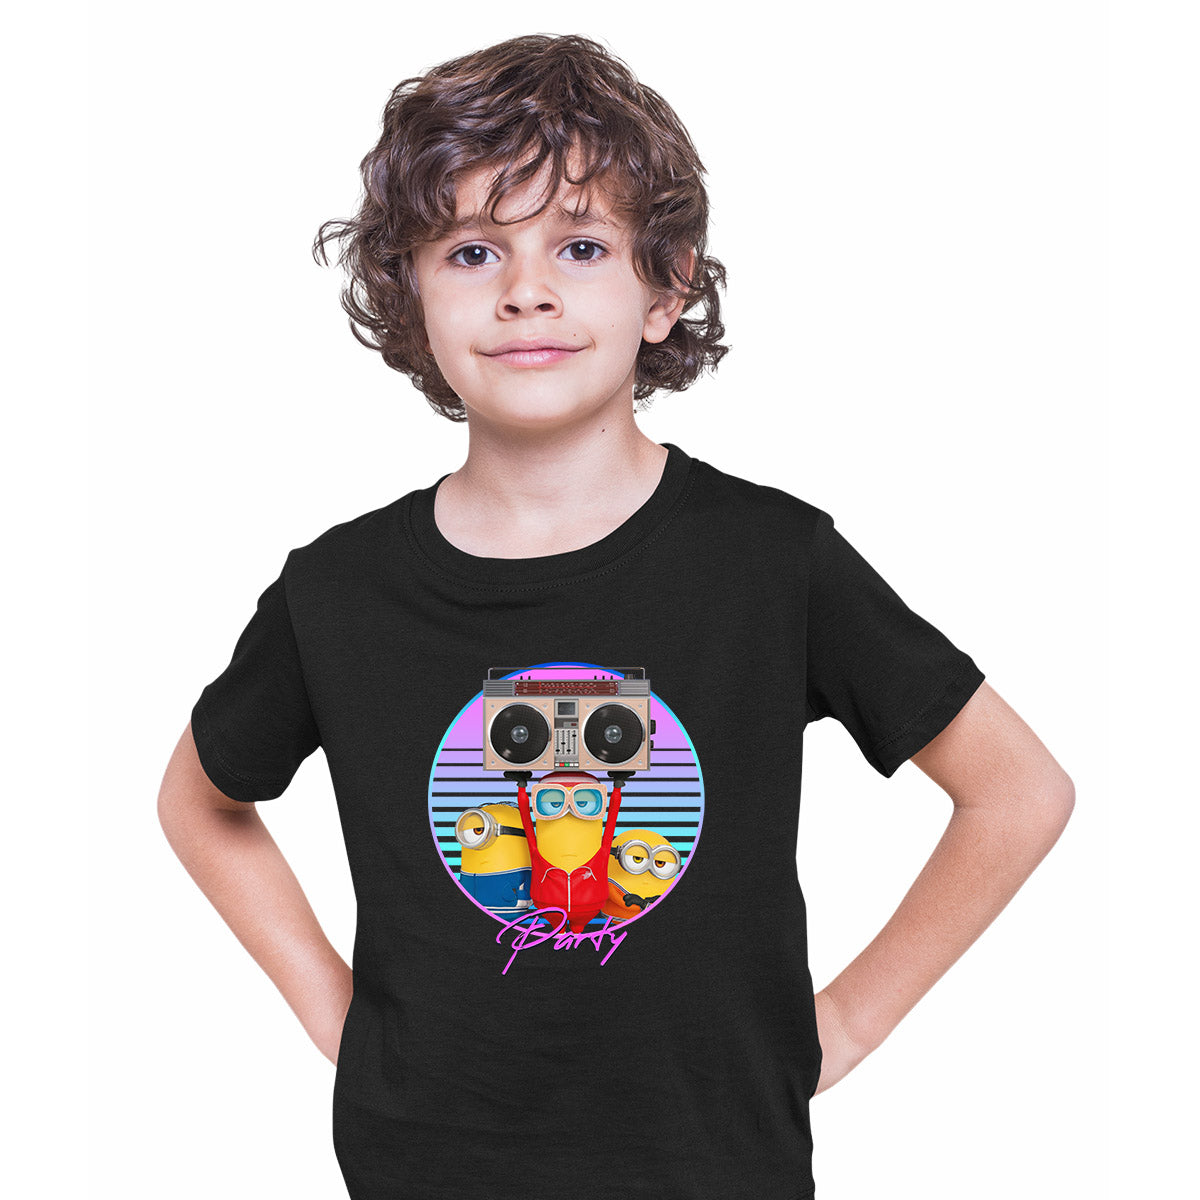 Minions The Rise of Gru Funny Retro Tee Kids Movie T-shirt Black